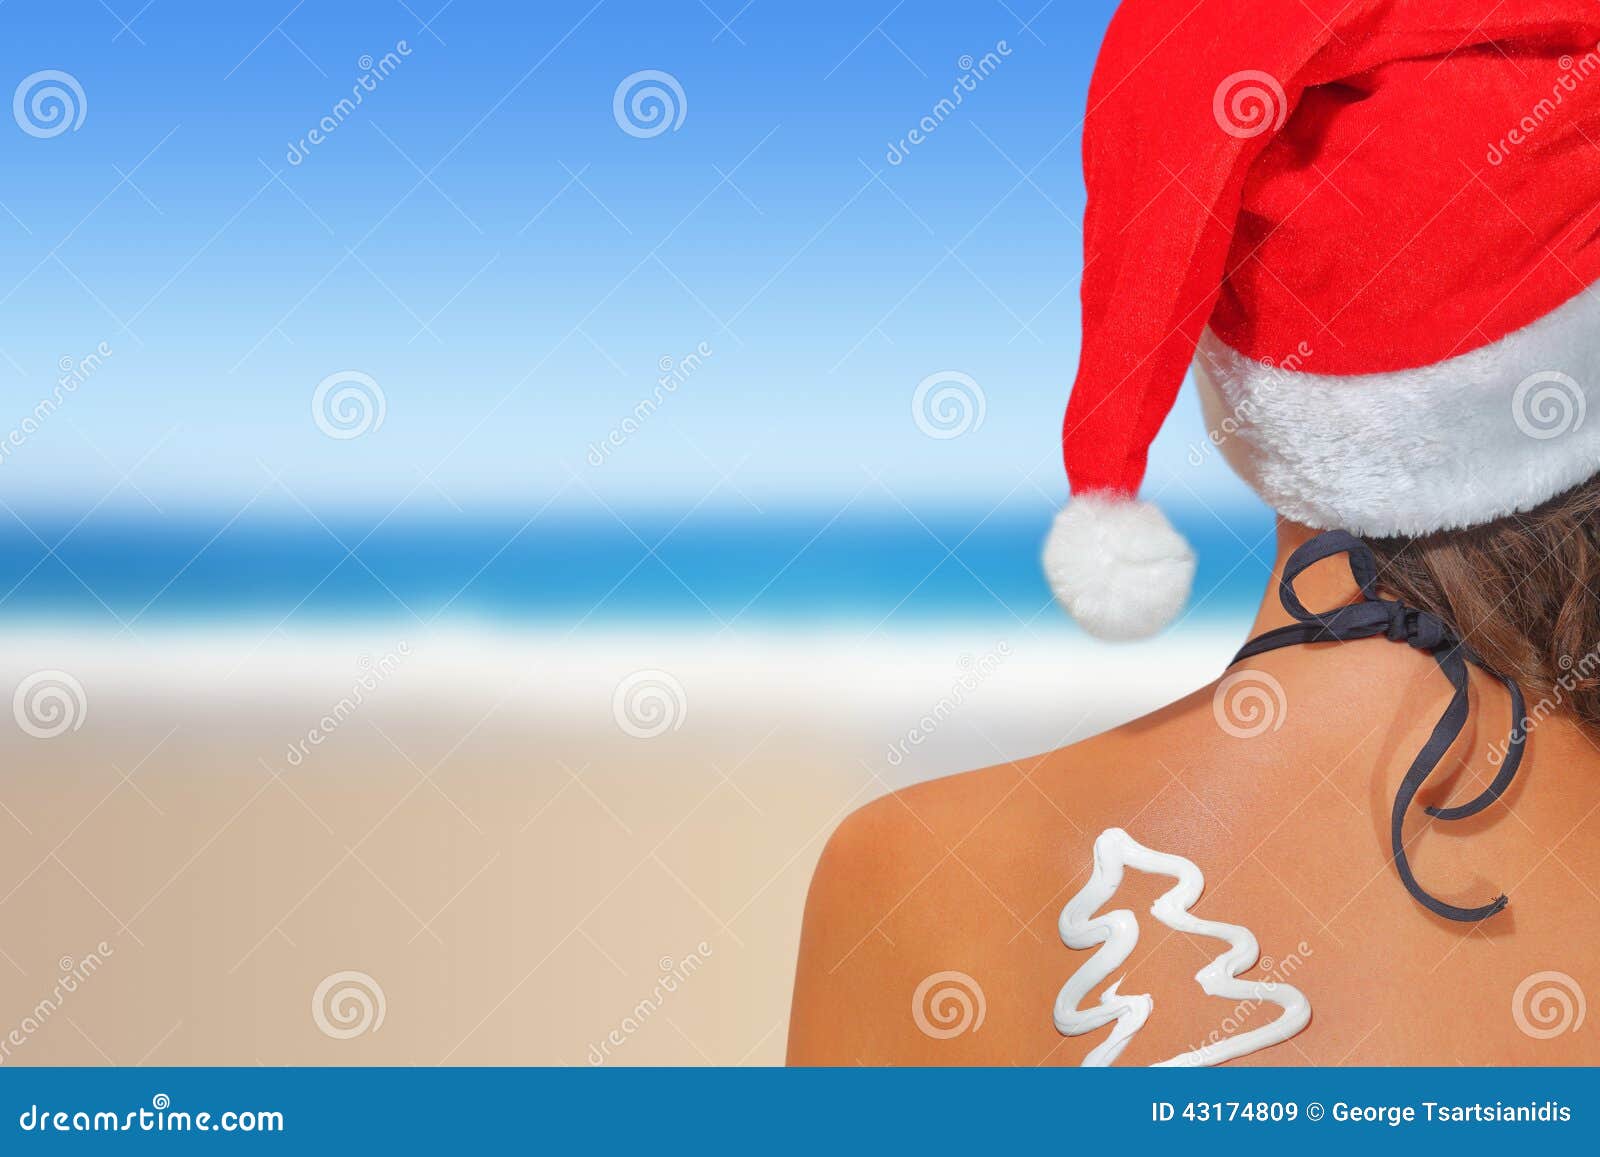 woman on the beach in santas hat